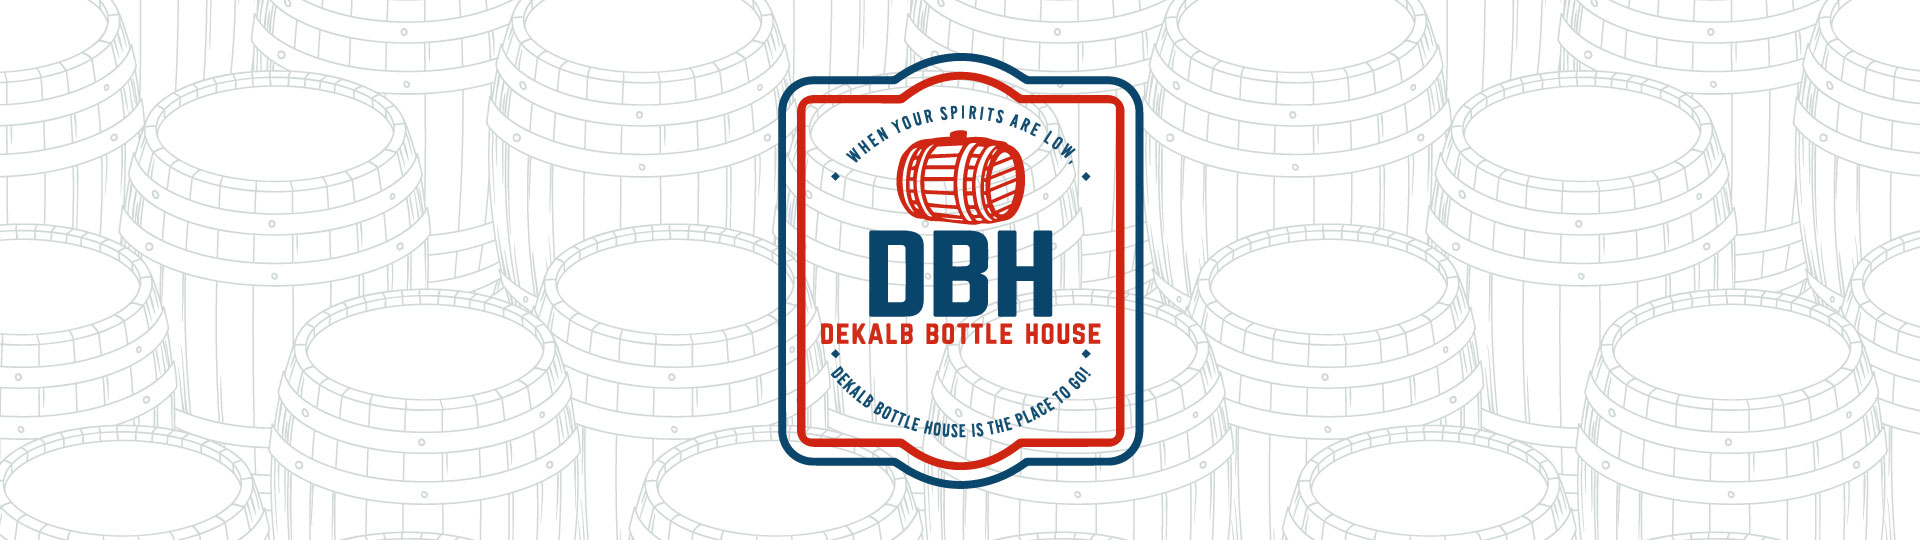 Dekalb Bottle House